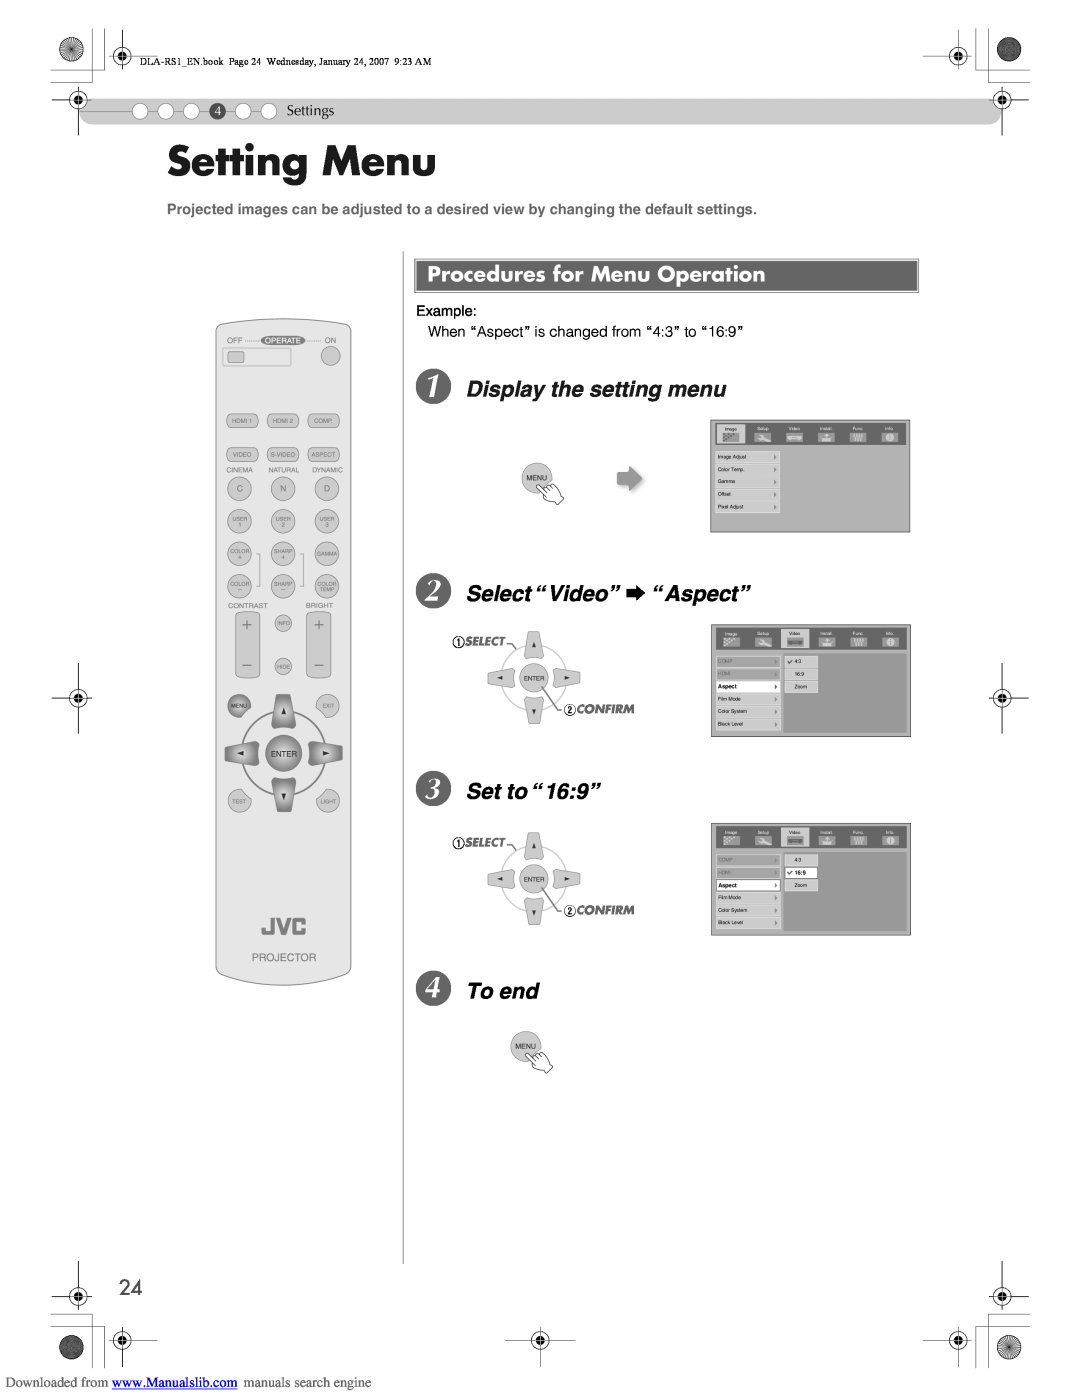 JVC DLA-RS1 Setting Menu, A Display the setting menu, B Select “Video” g “Aspect”, C Set to “16 9”, D To end, Settings 